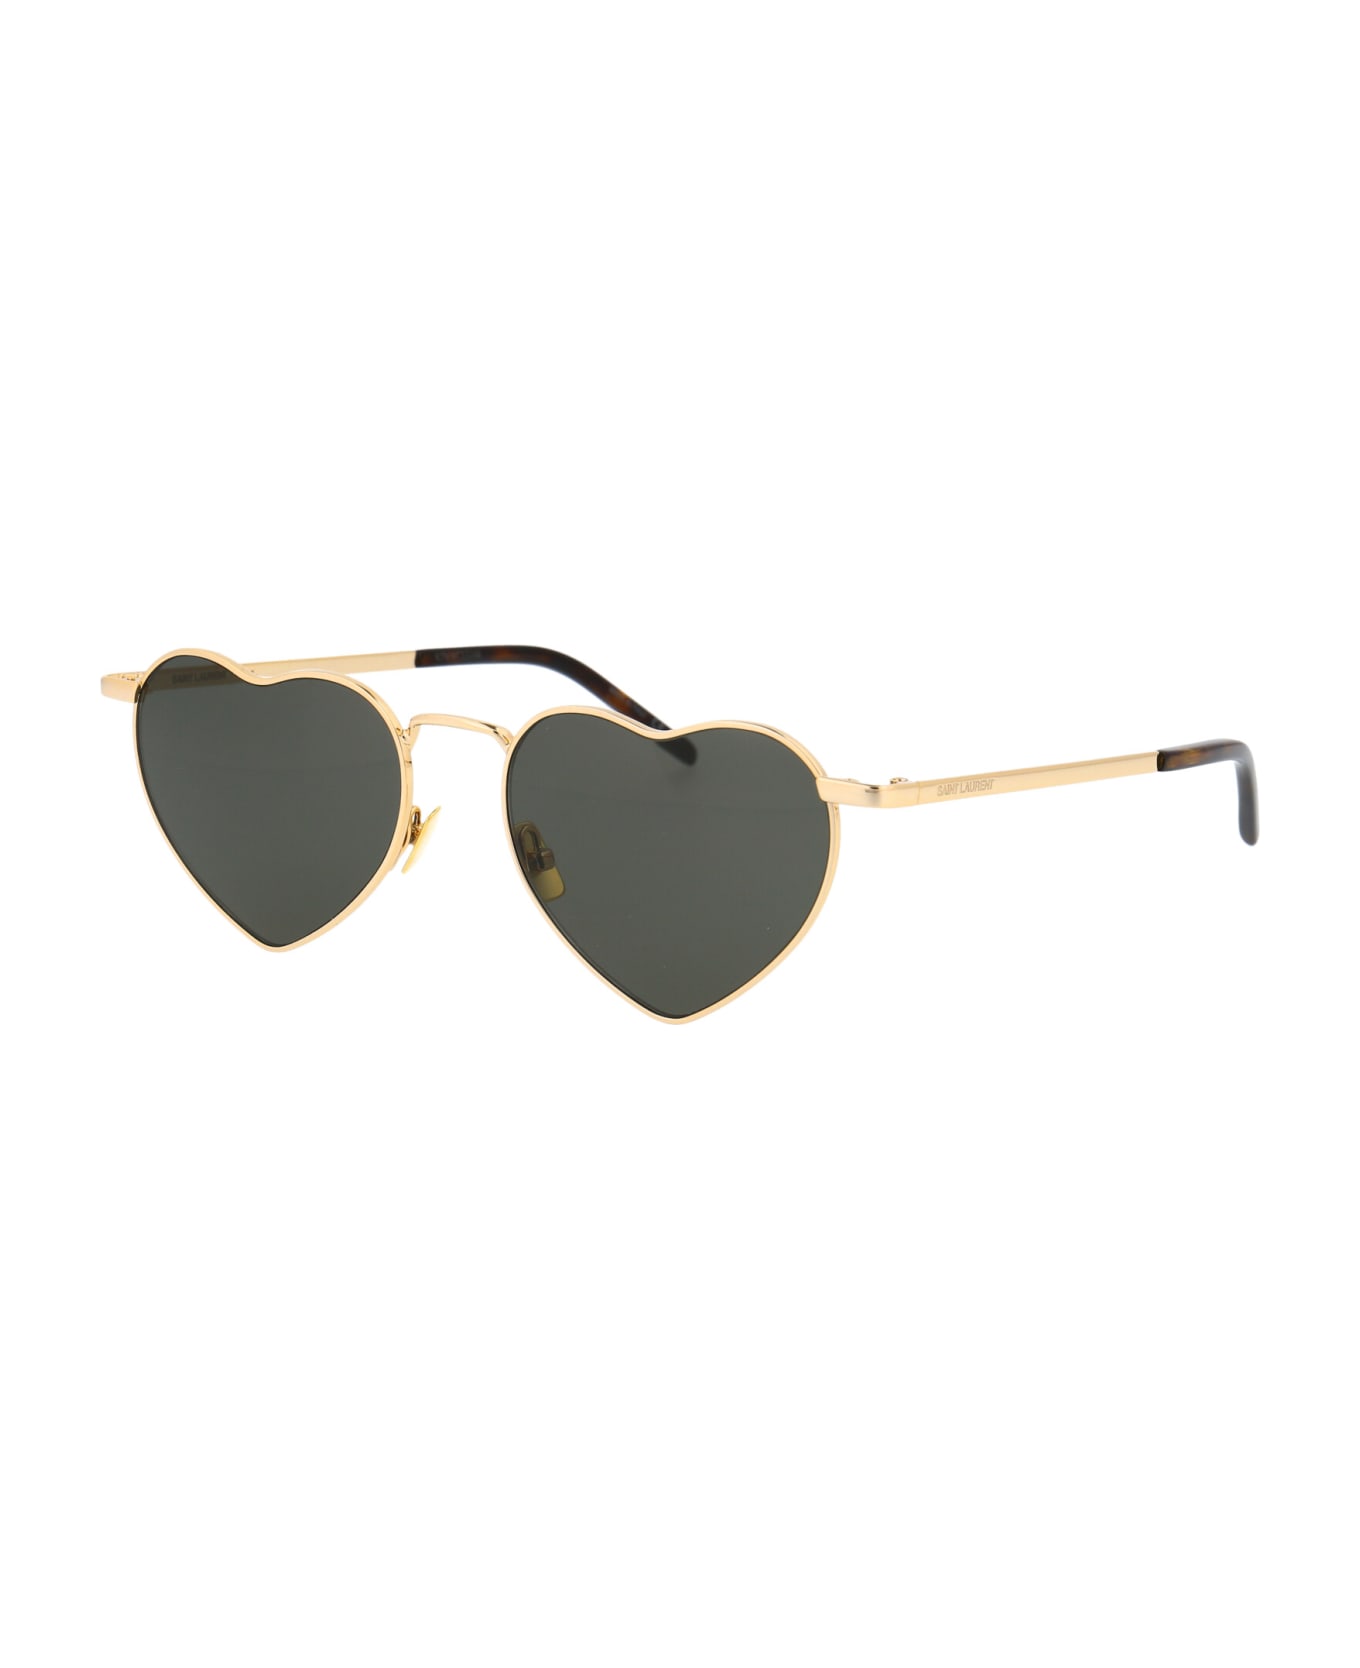 Saint Laurent Eyewear Sl 301 Loulou Sunglasses - 004 GOLD GOLD GREY